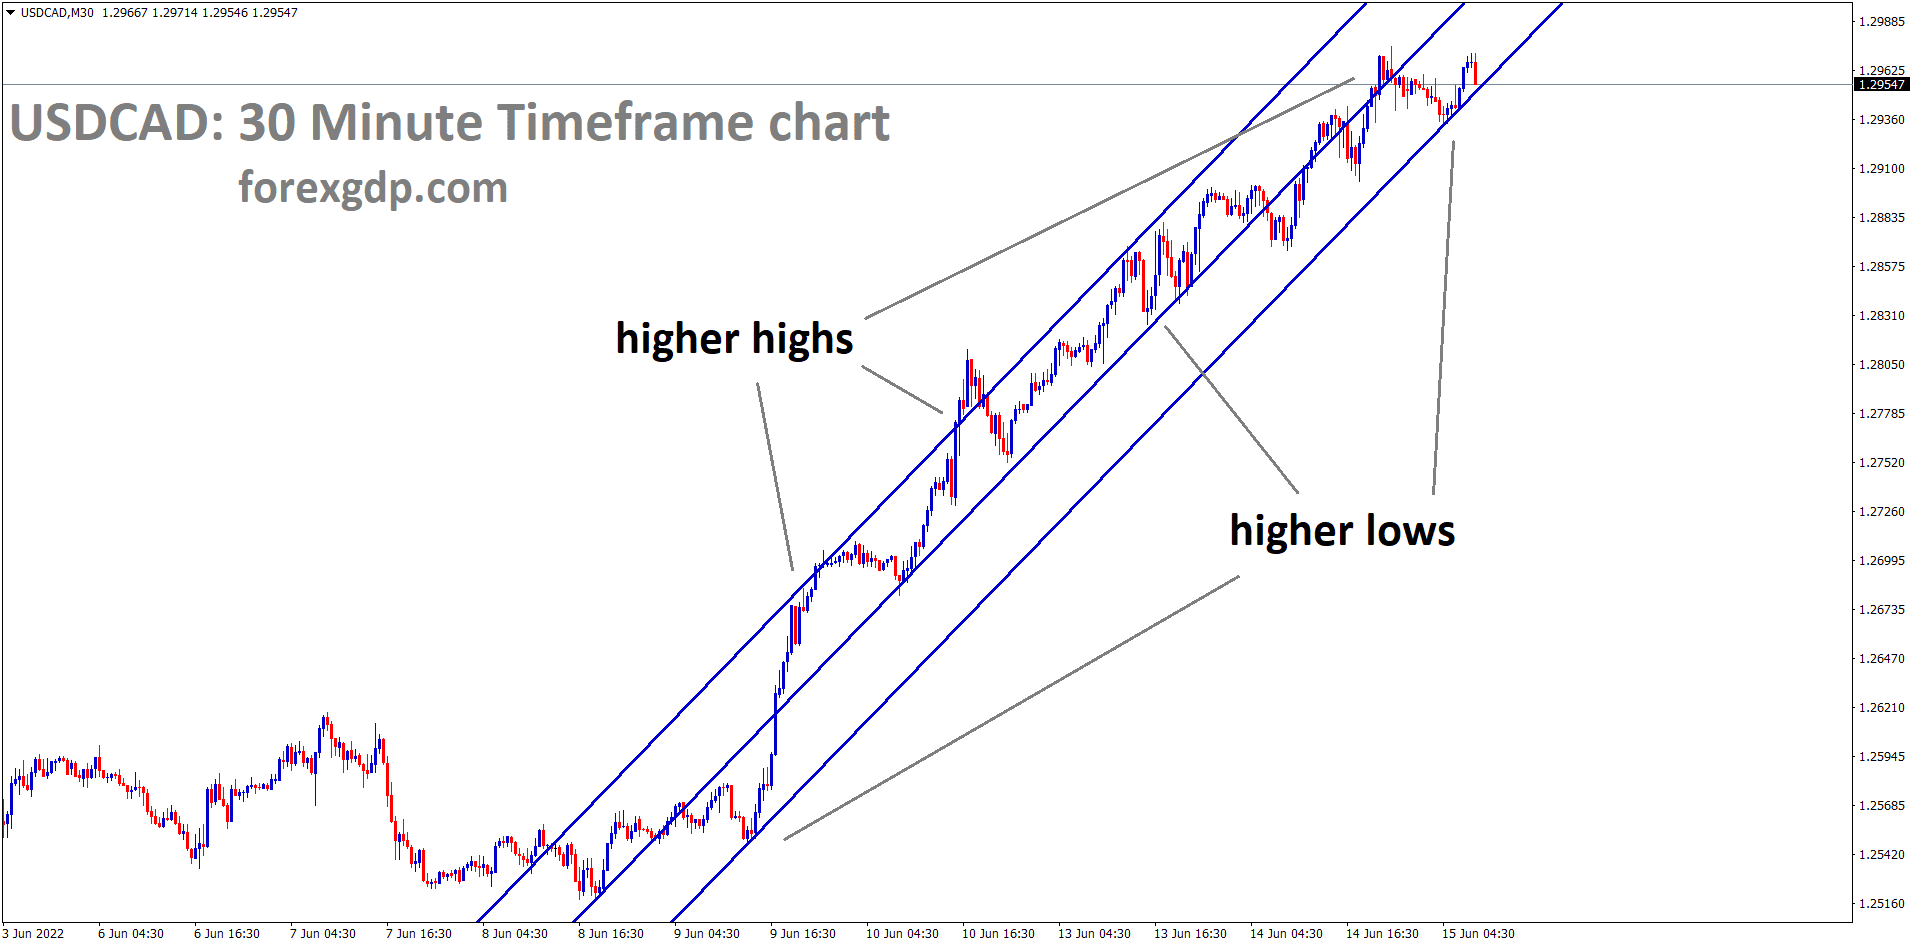 USDCAD 30 Minute Timeframe chart showing bullish market conditions